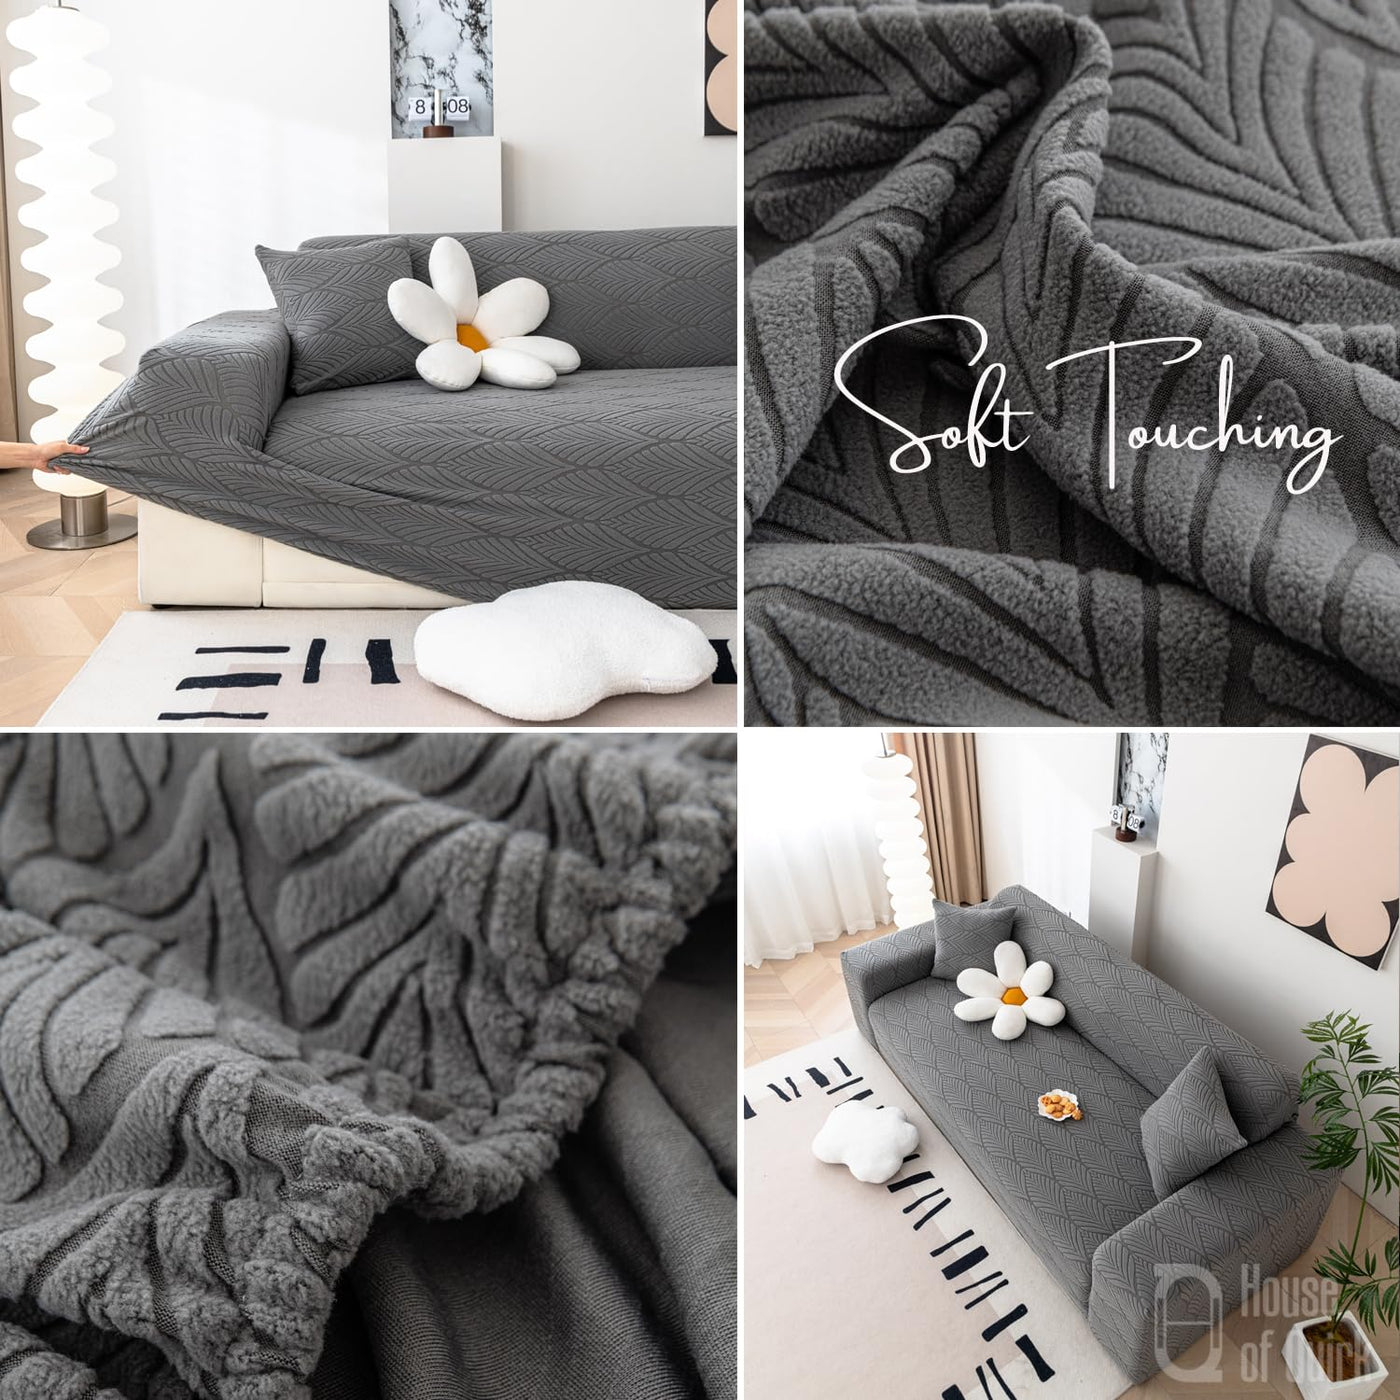 Universal Jacquard Leaf Texture Fabric Sofa Cover-Charcoal